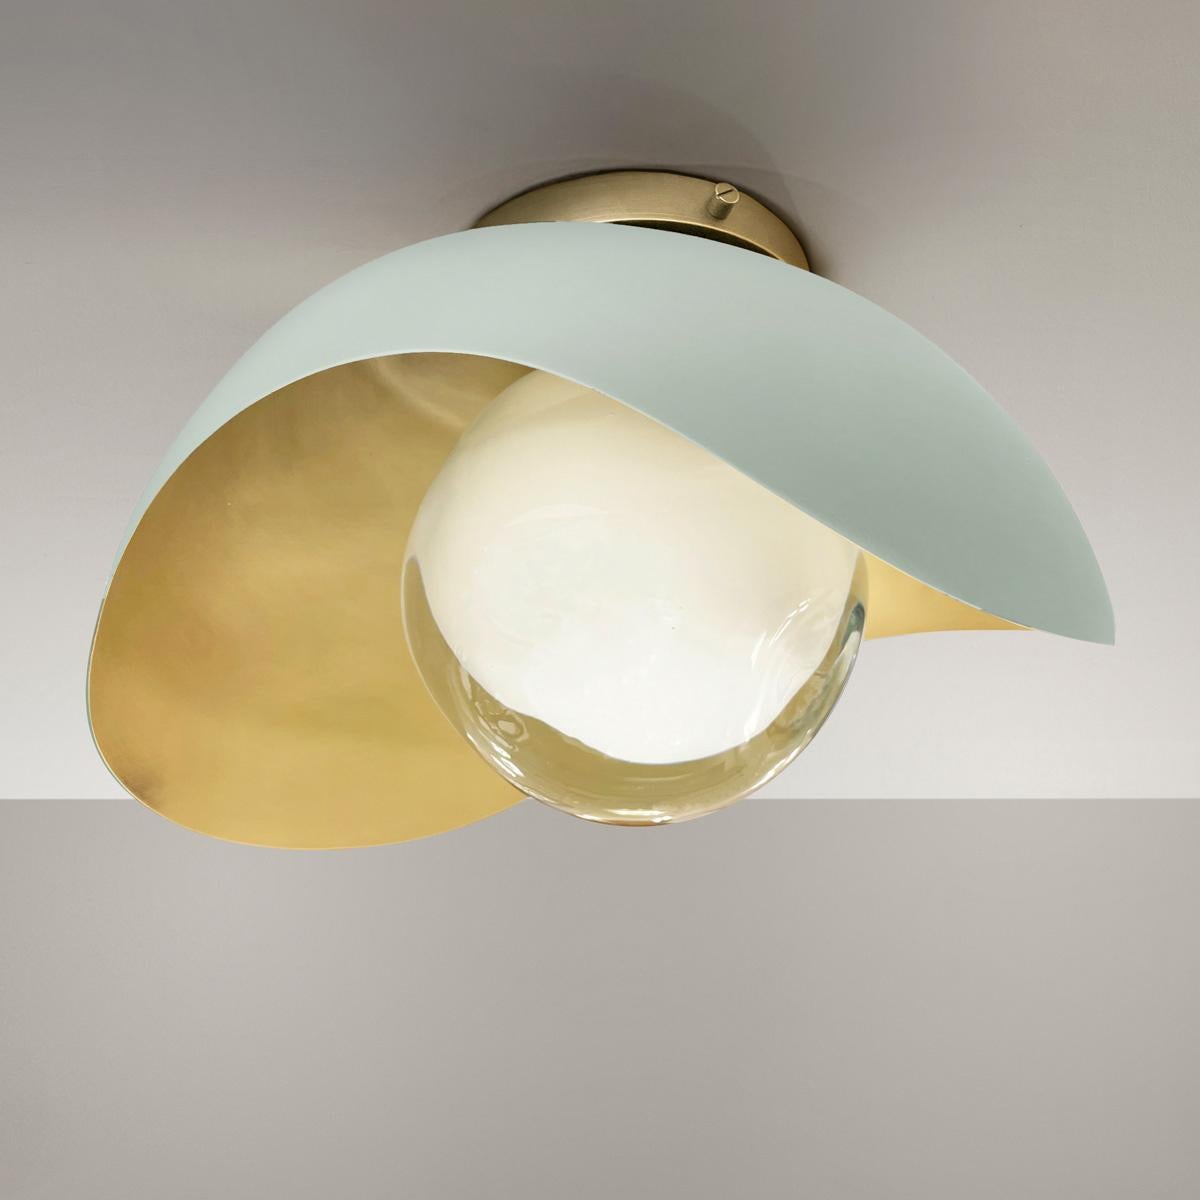 Perla Flushmount Ceiling Light by Gaspare Asaro-Brass Finish For Sale 2